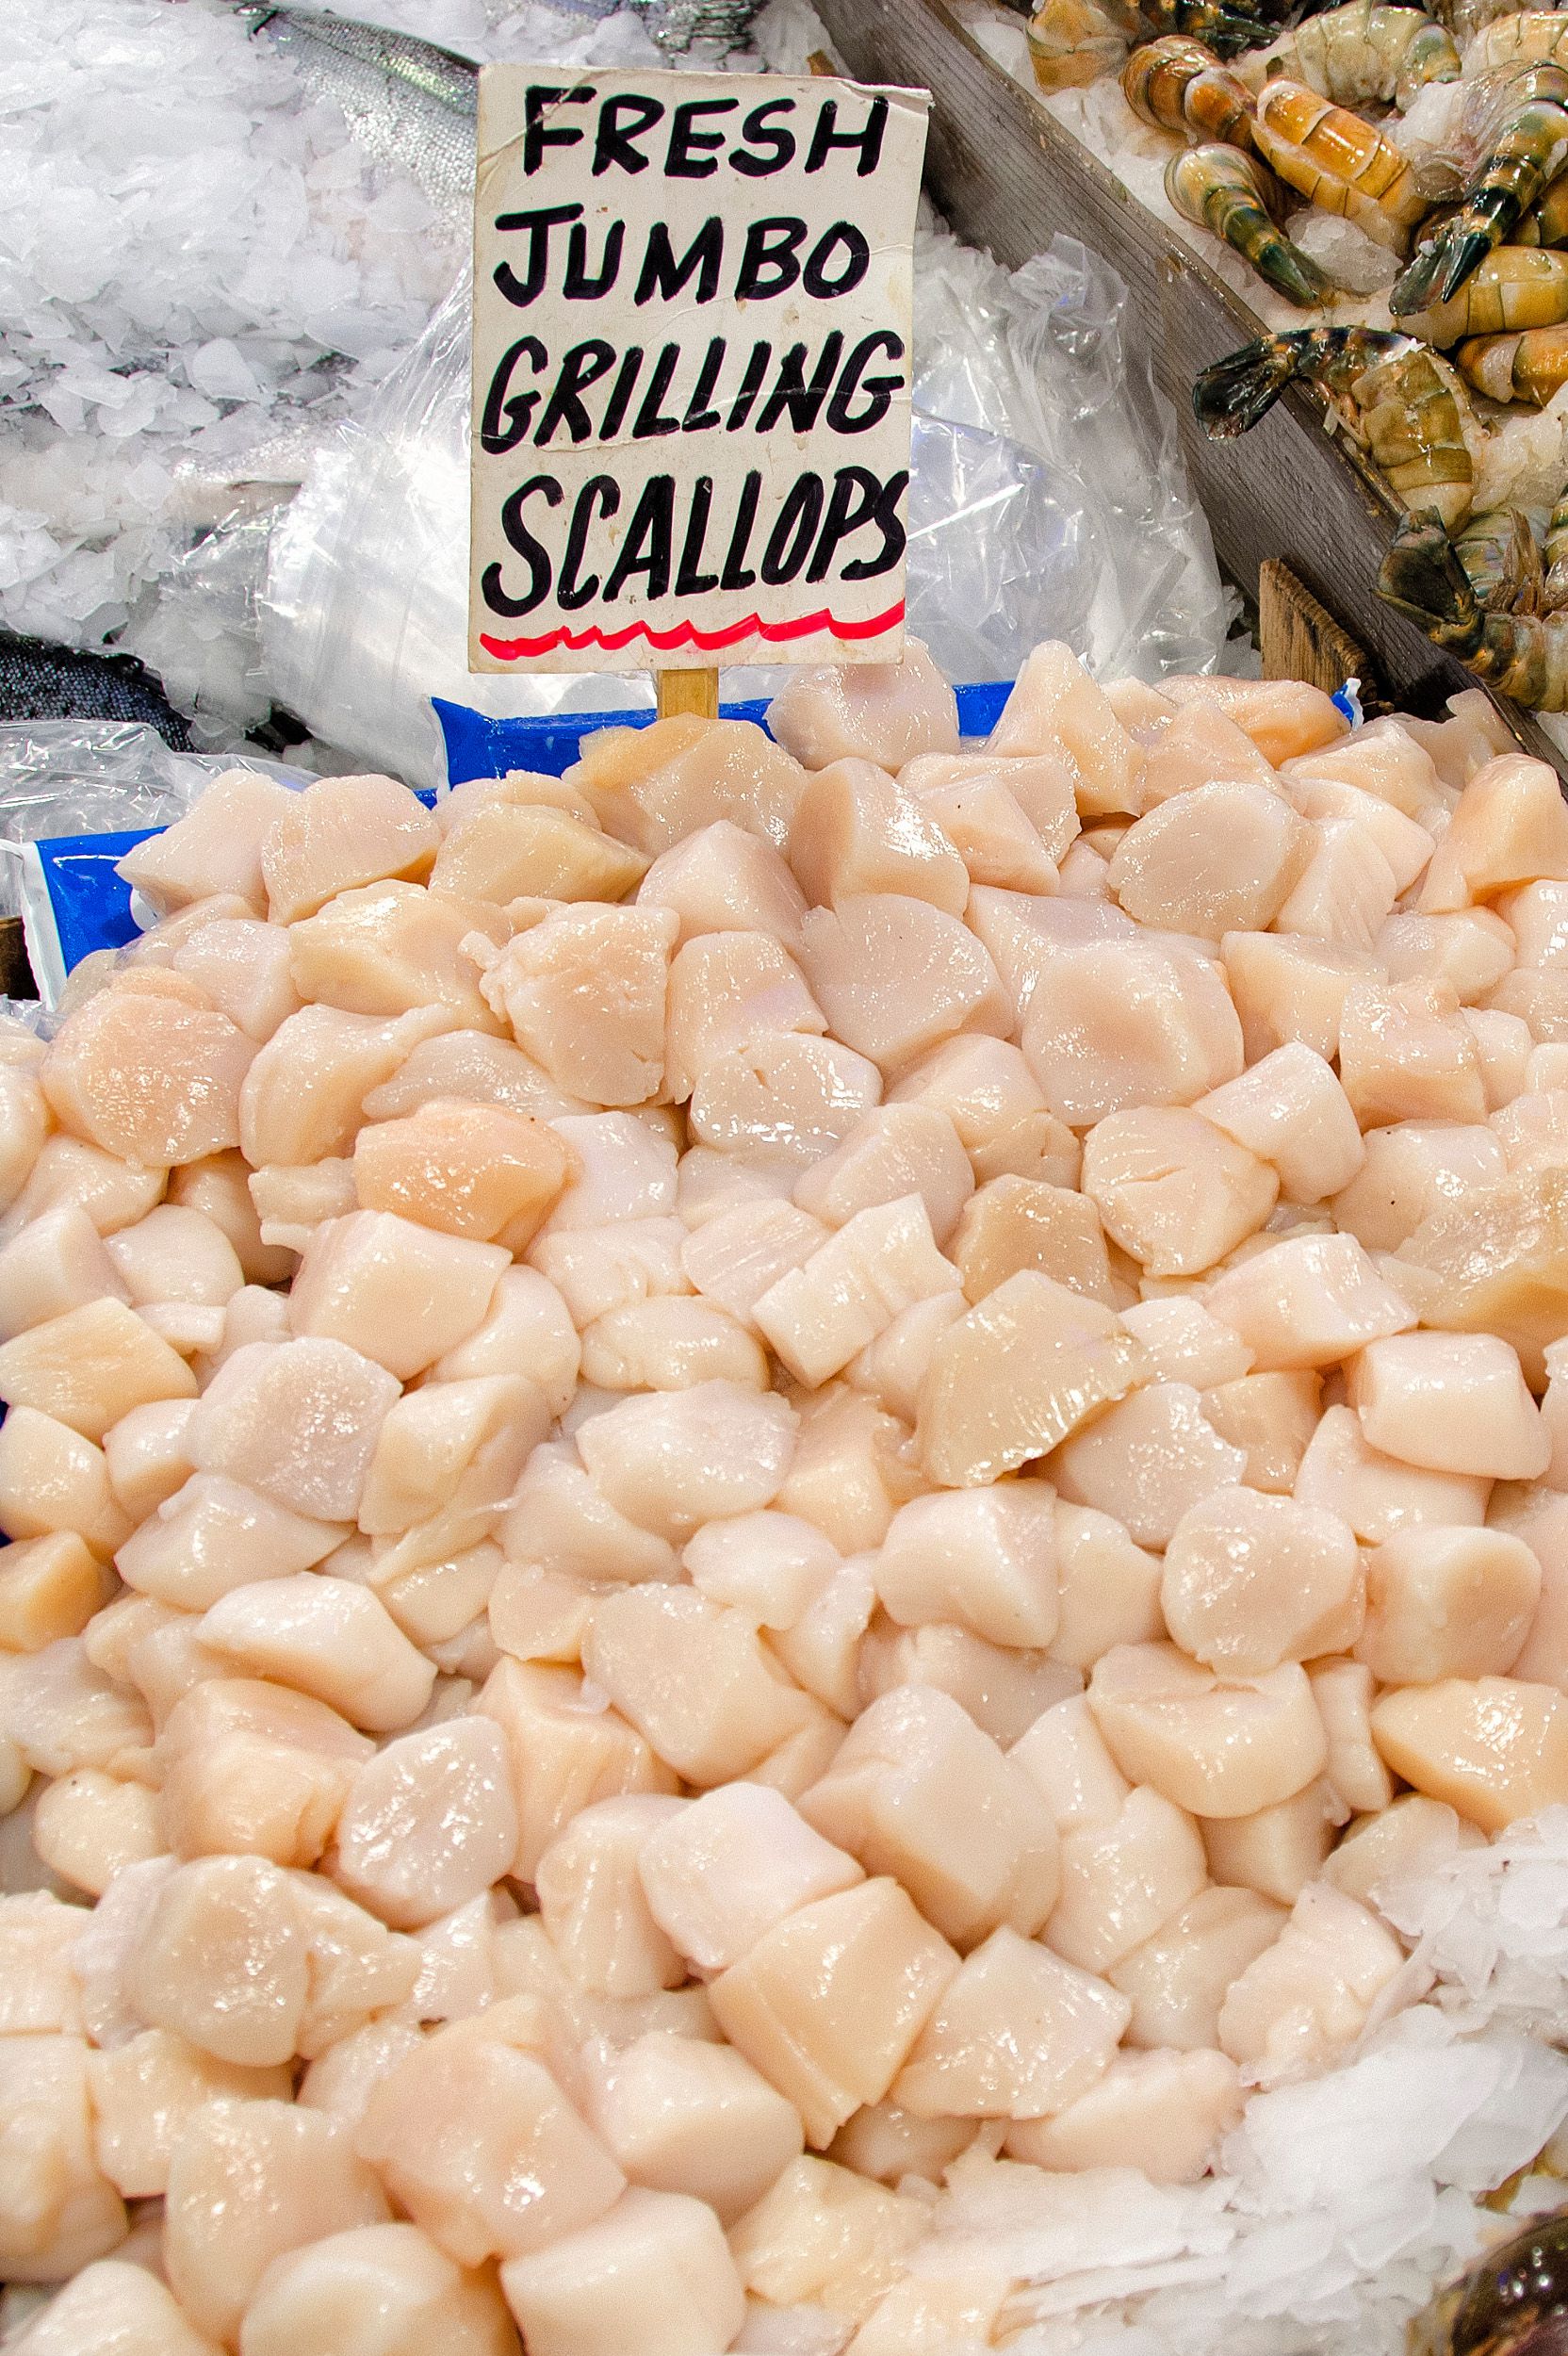 Sea Scallops: Guide to Buying Fresh Scallops